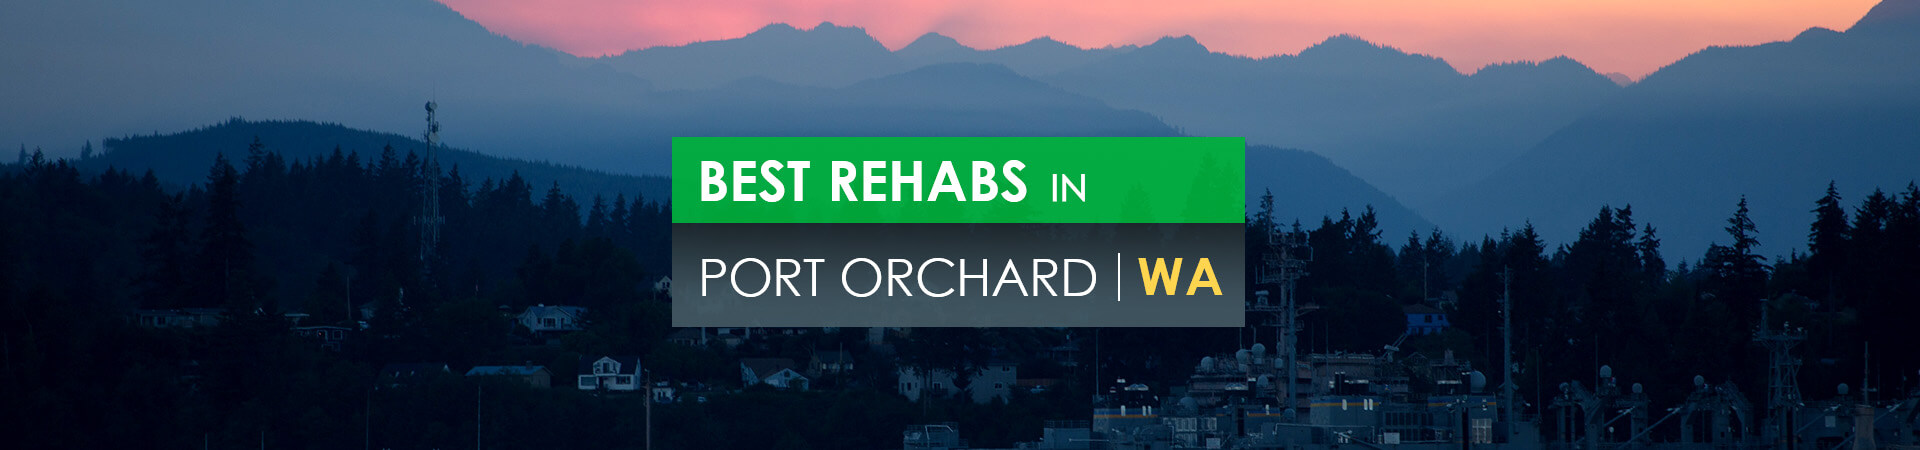 Best rehabs in Port Orchard, WA